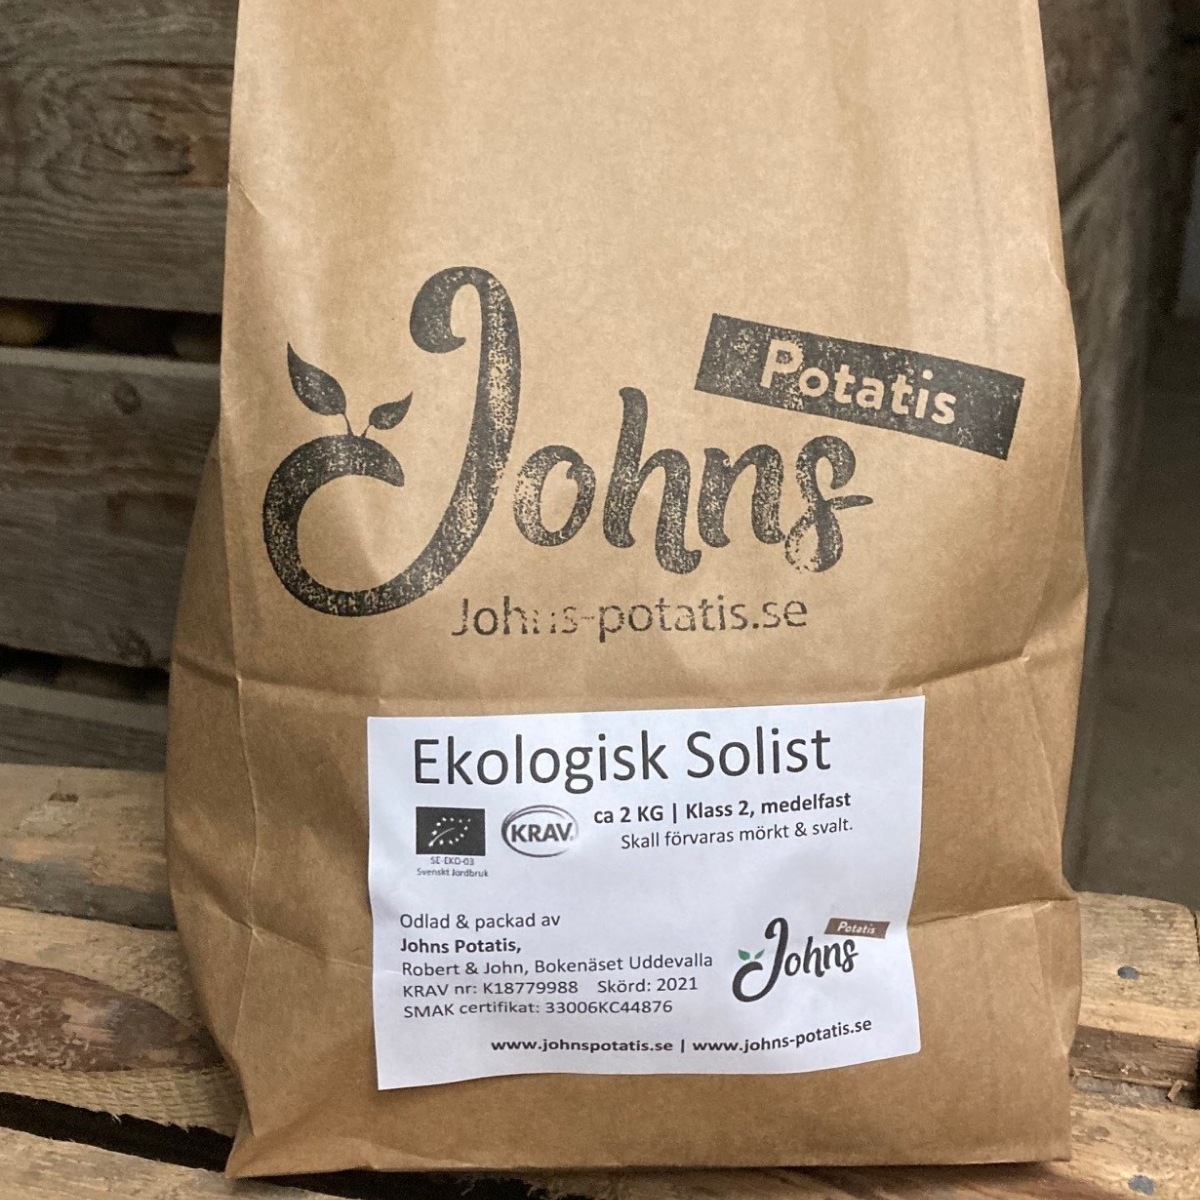 Johns Potatis/RK Ekopotatis's Potatis Solist'